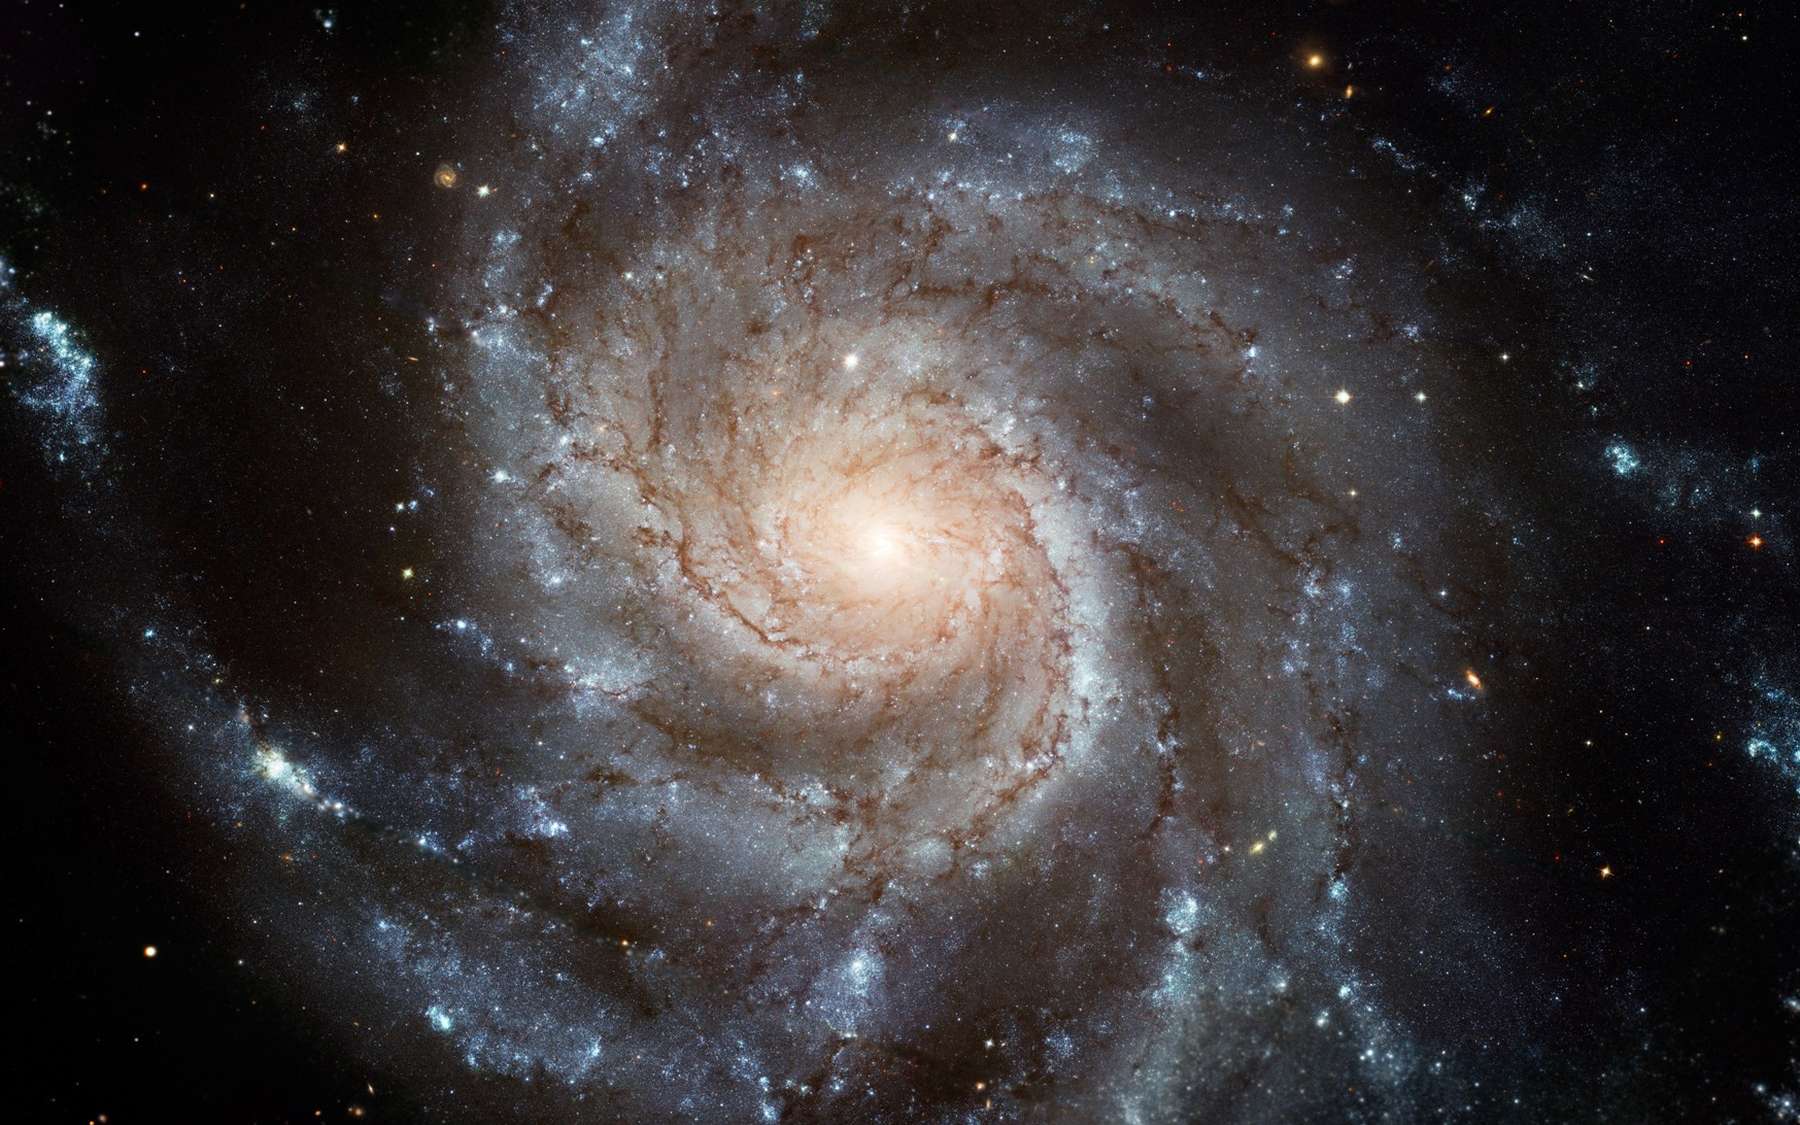 La galaxie du Moulinet, M 101. © Nasa, ESA